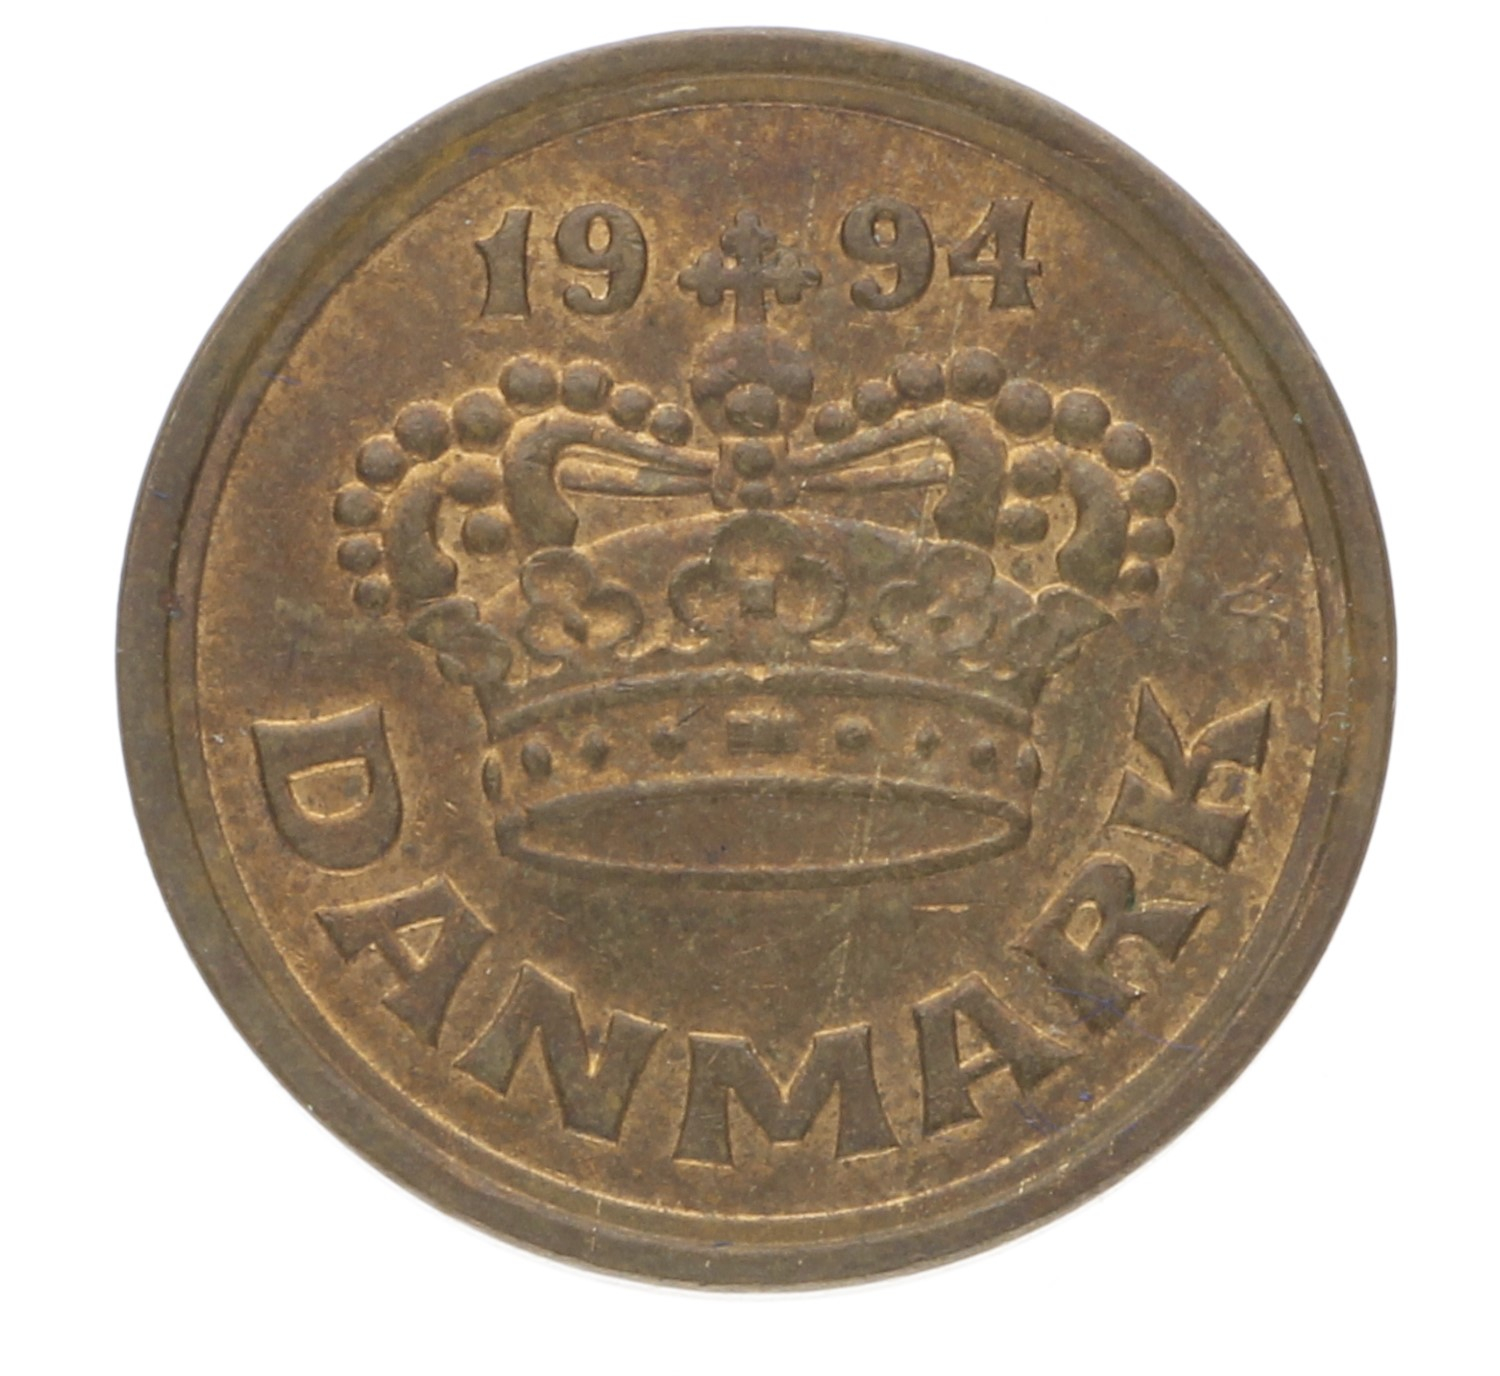 50 Ore - Denmark - 1994